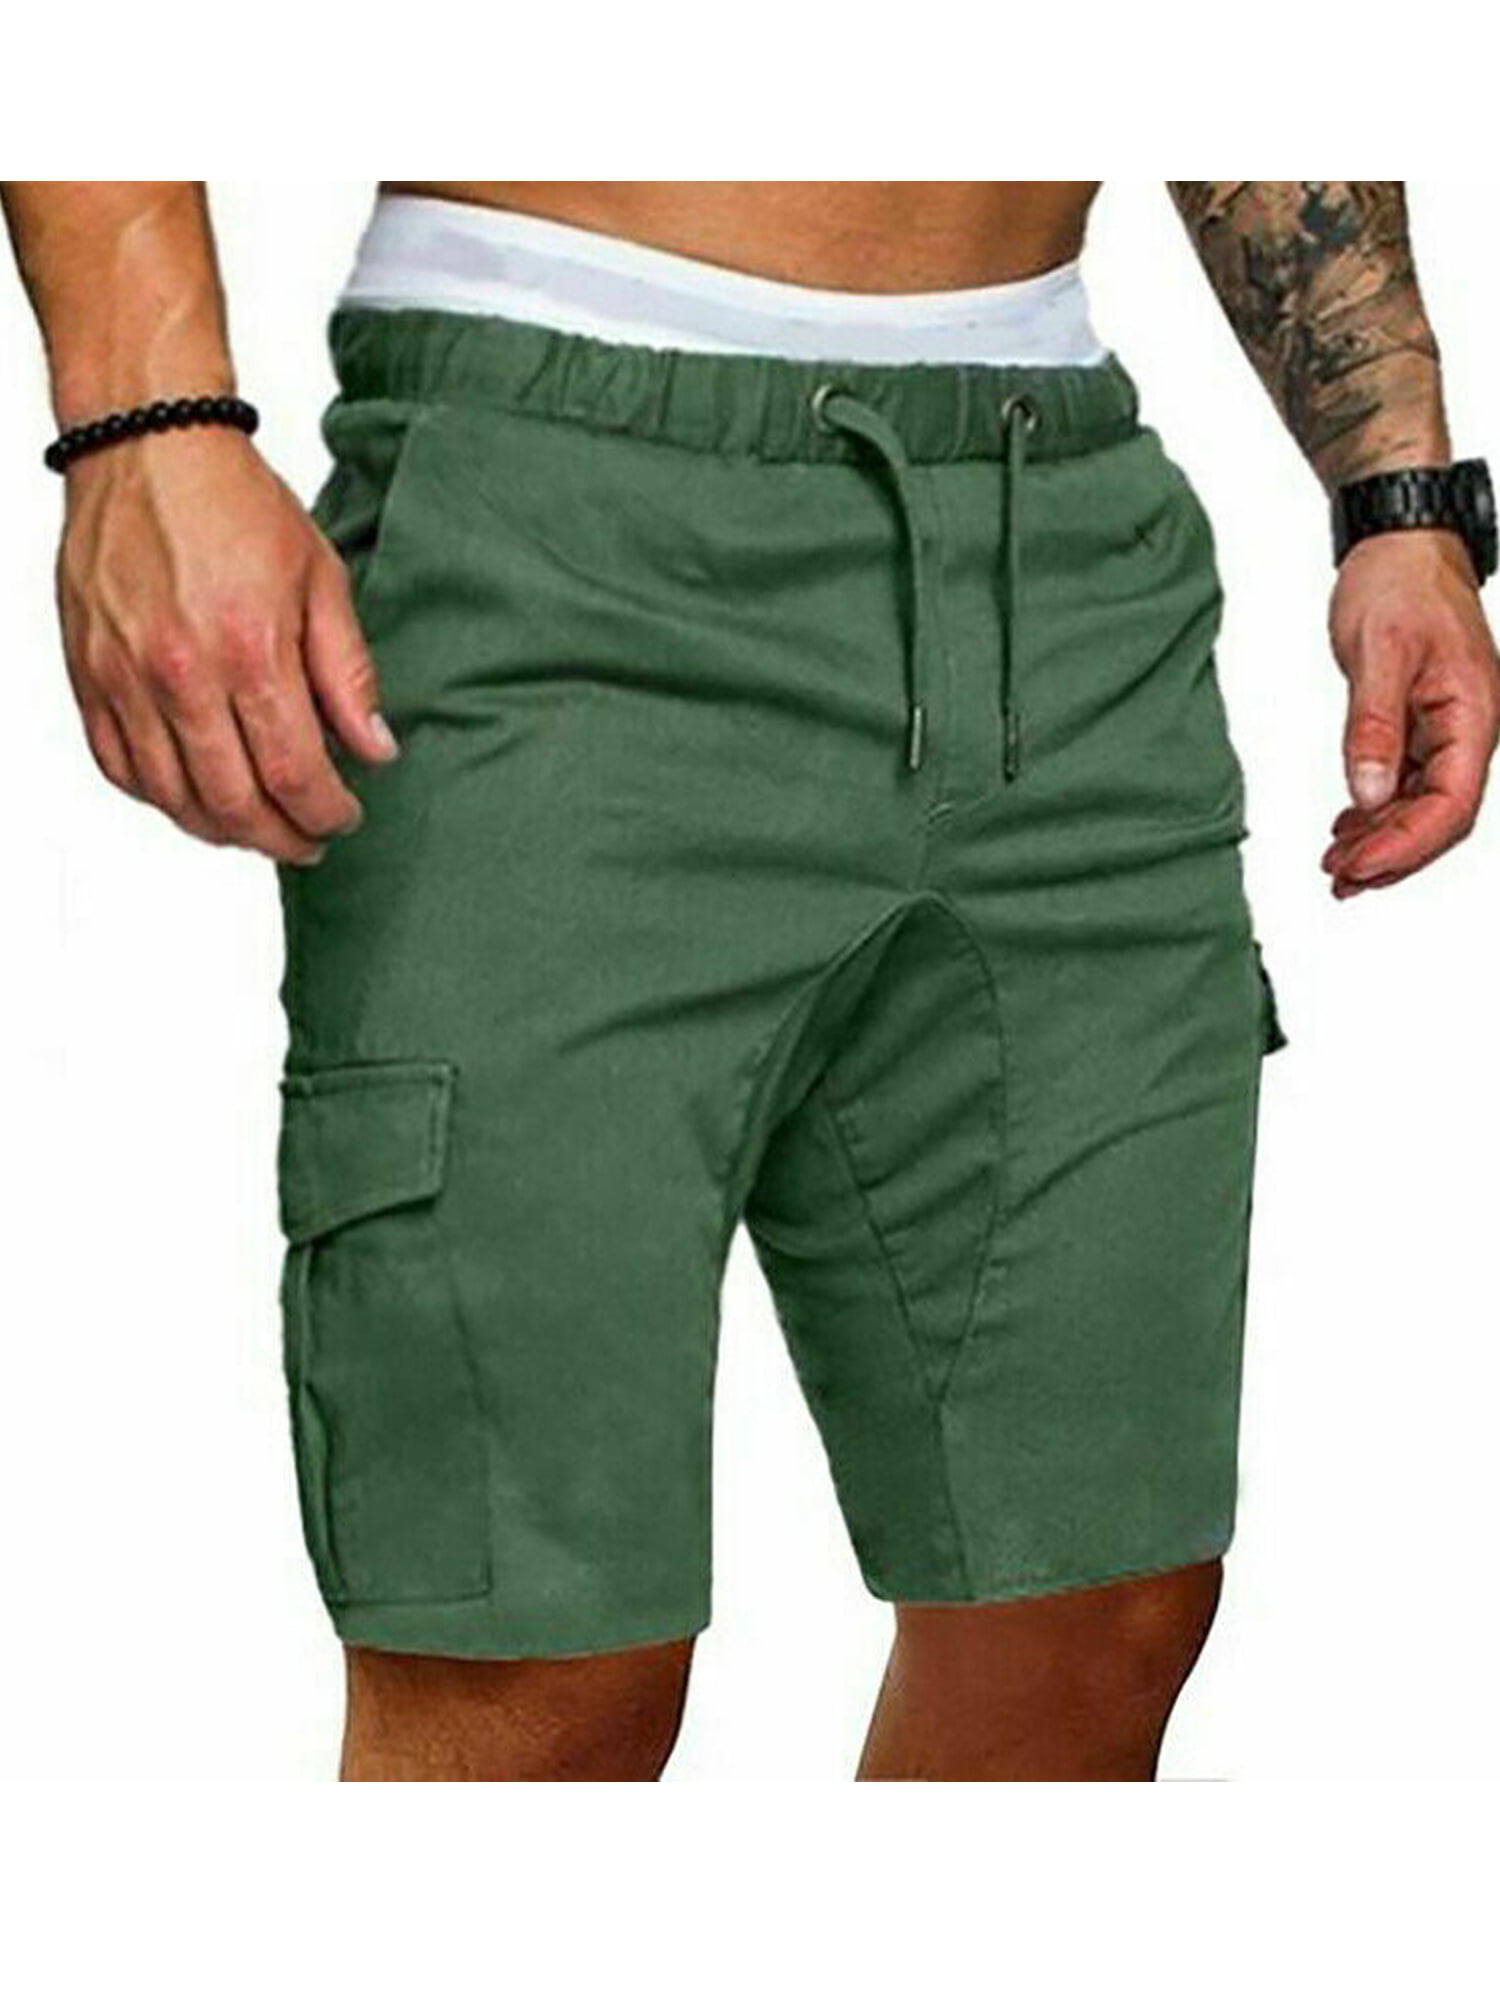 MERSARIPHY Men's Knee Length Solid Cargo Shorts - Walmart.com